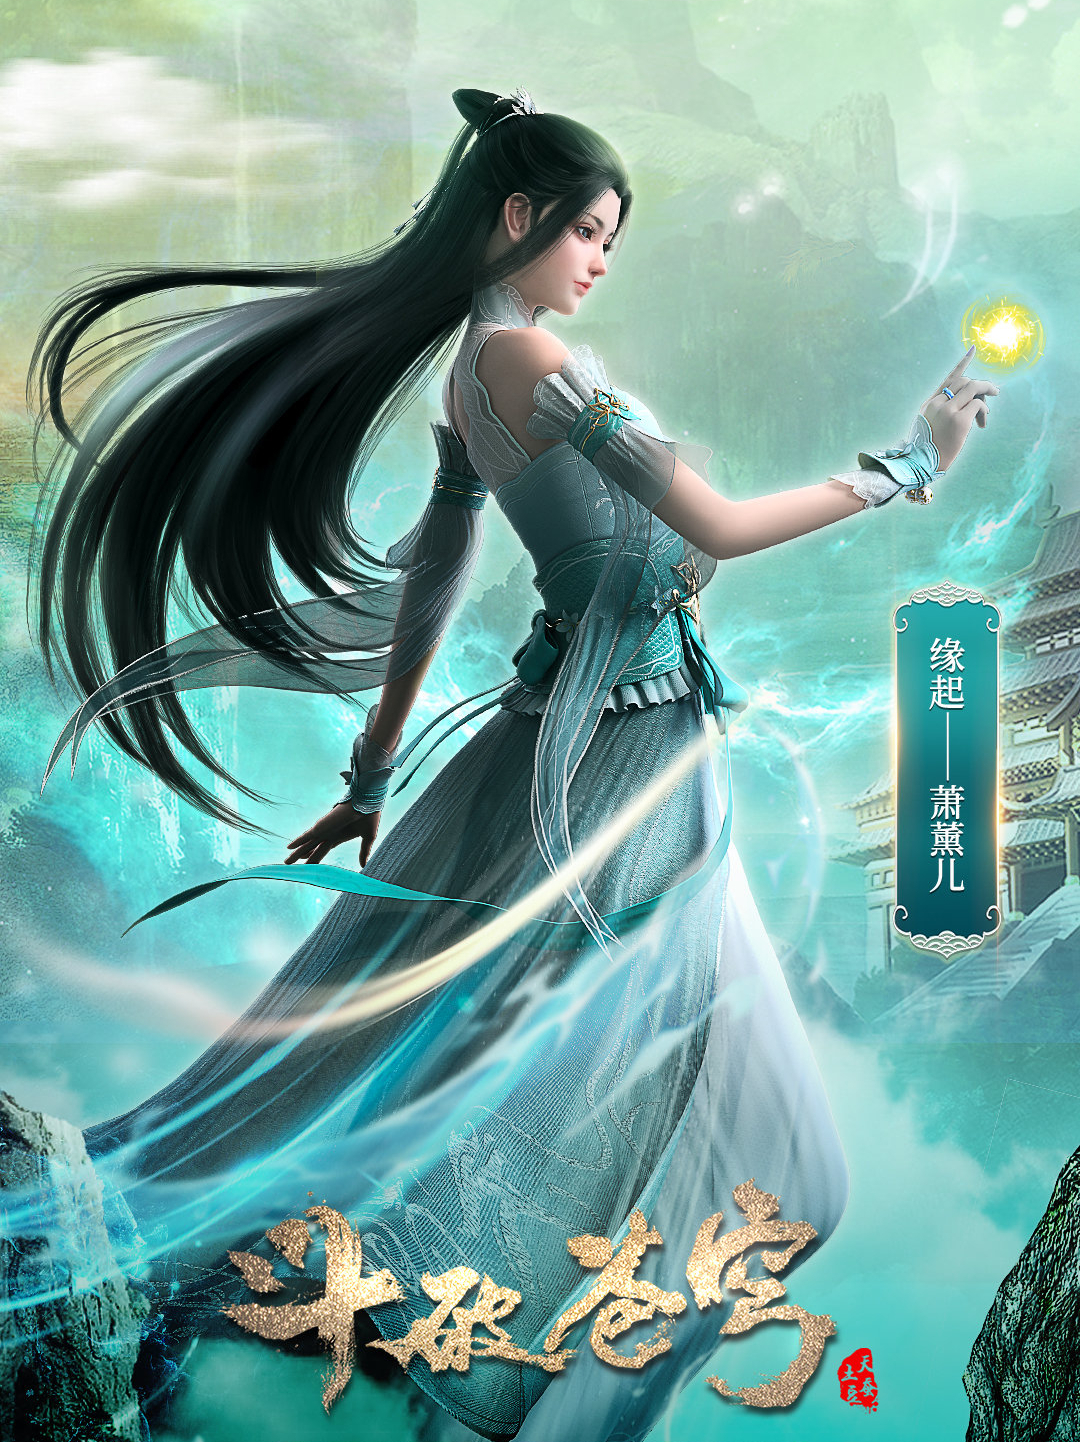 Ling Ying, Battle Through the Heavens Wiki